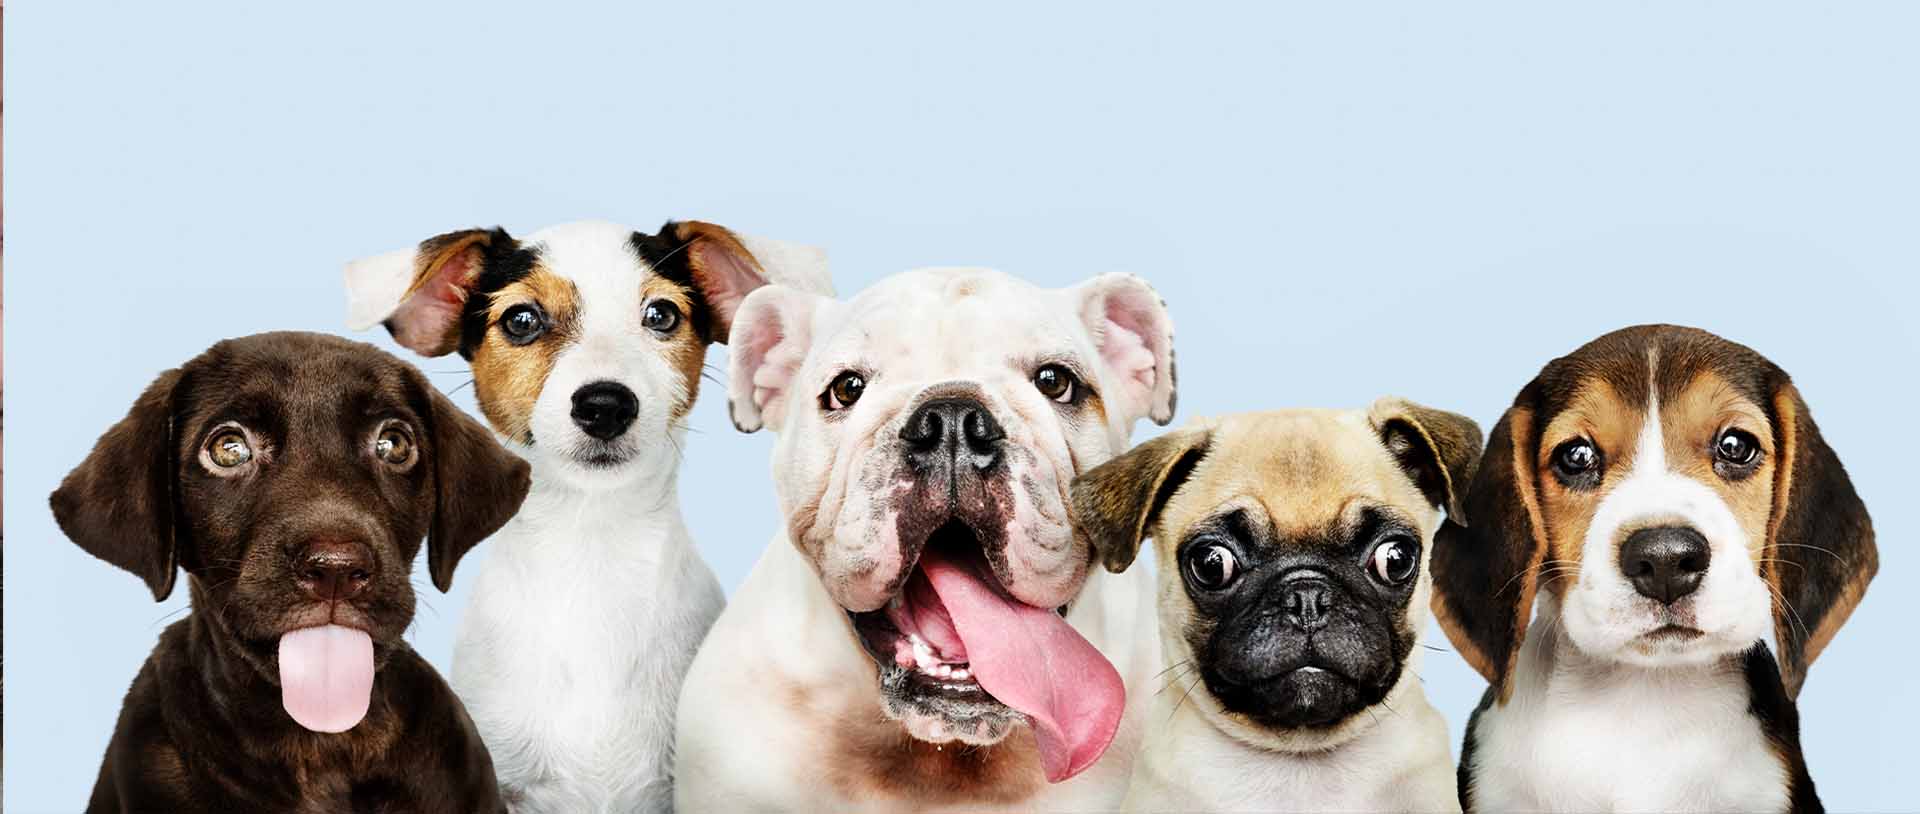 Digital Paw Marketing Agency donates to dog charities